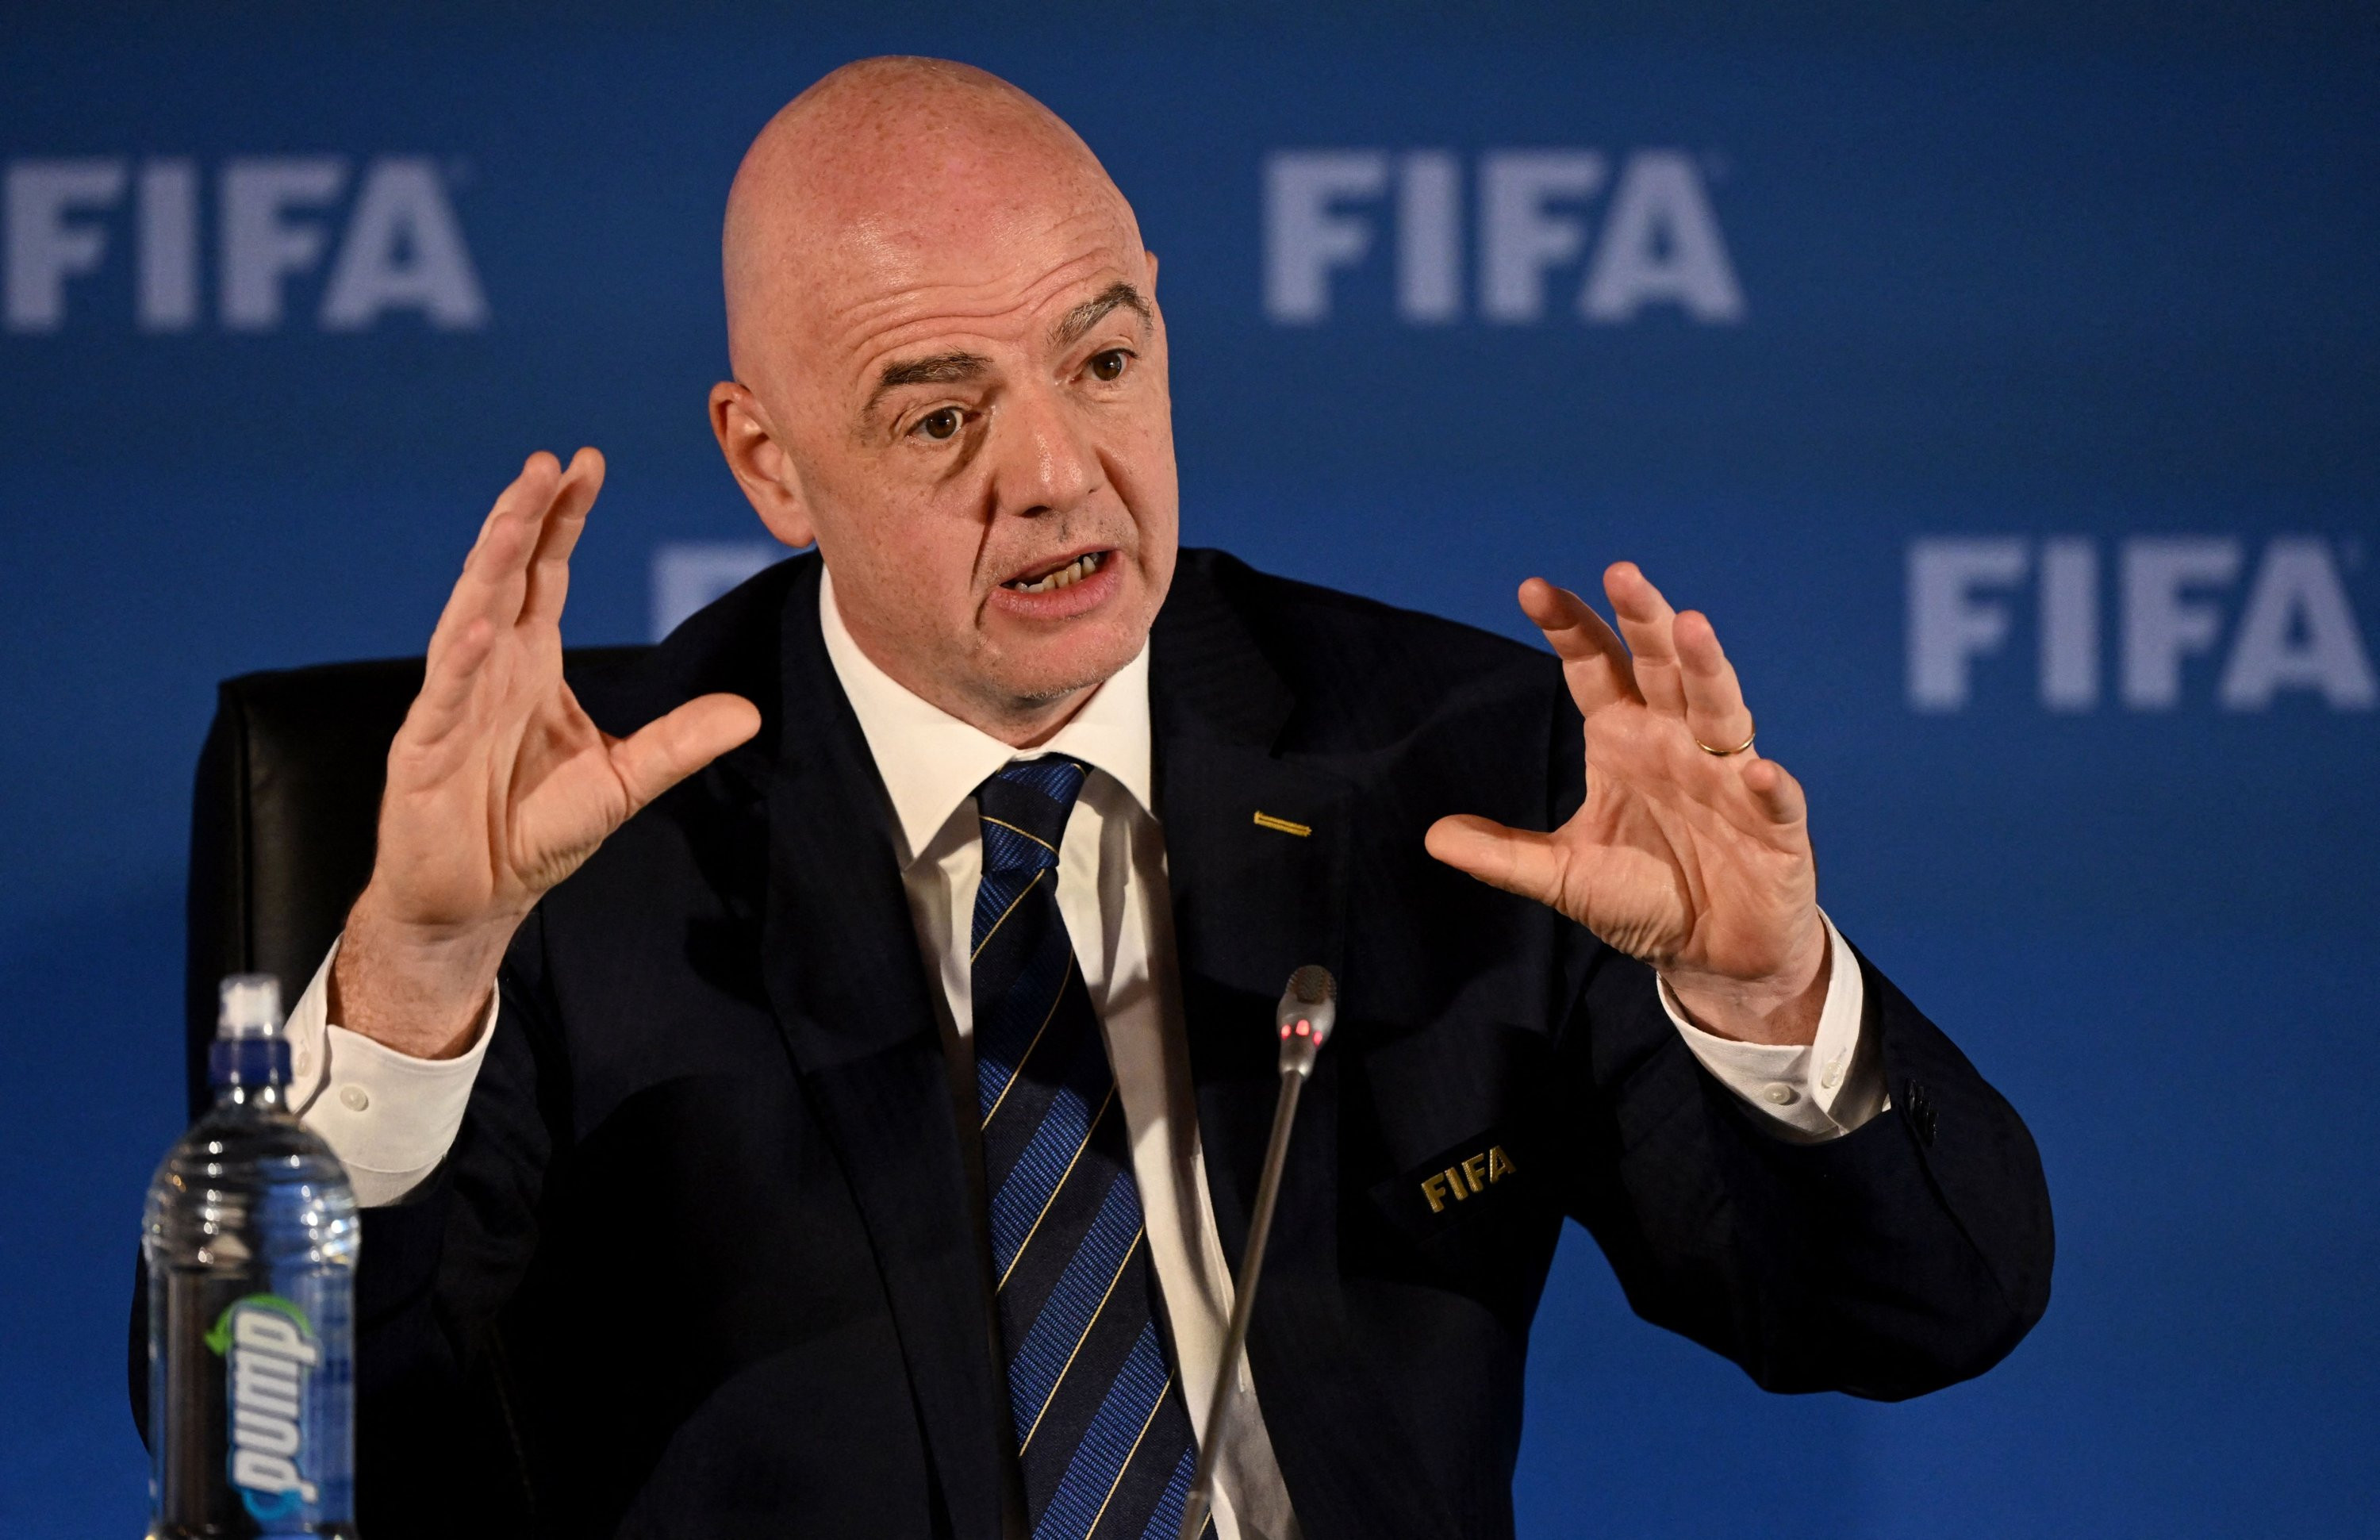 World Cup will help Qatar battle 'prejudice': Infantino